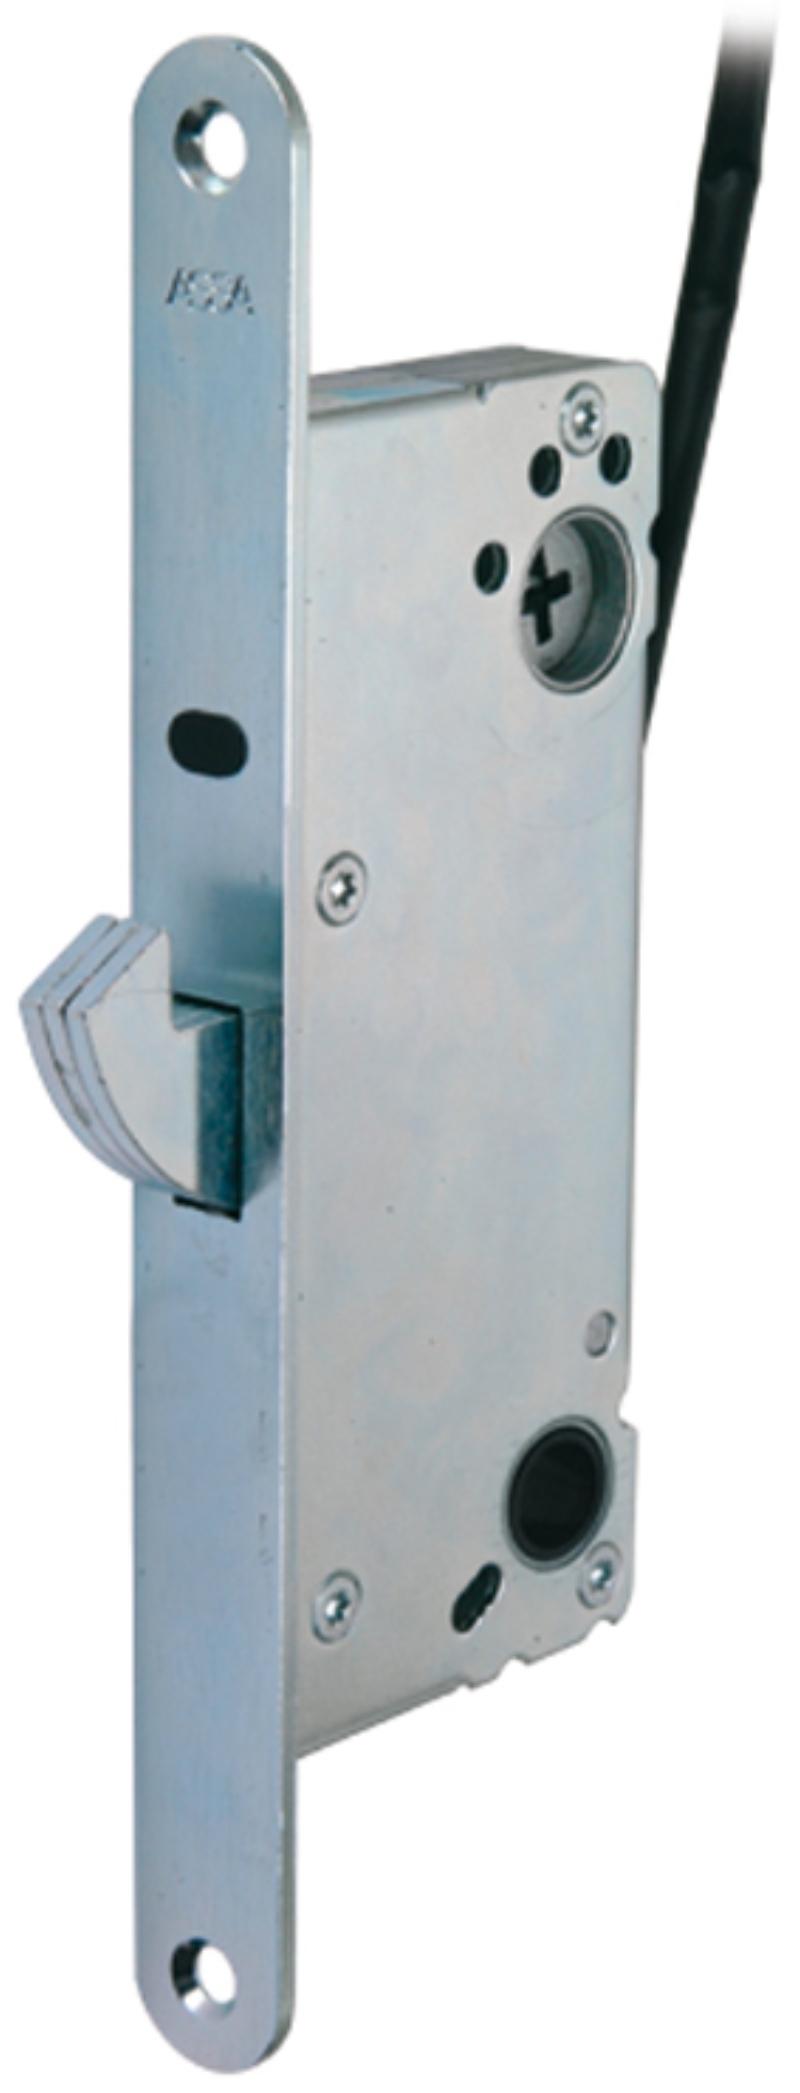 Assa motor lock Connect 811s/50 lock box (968838)